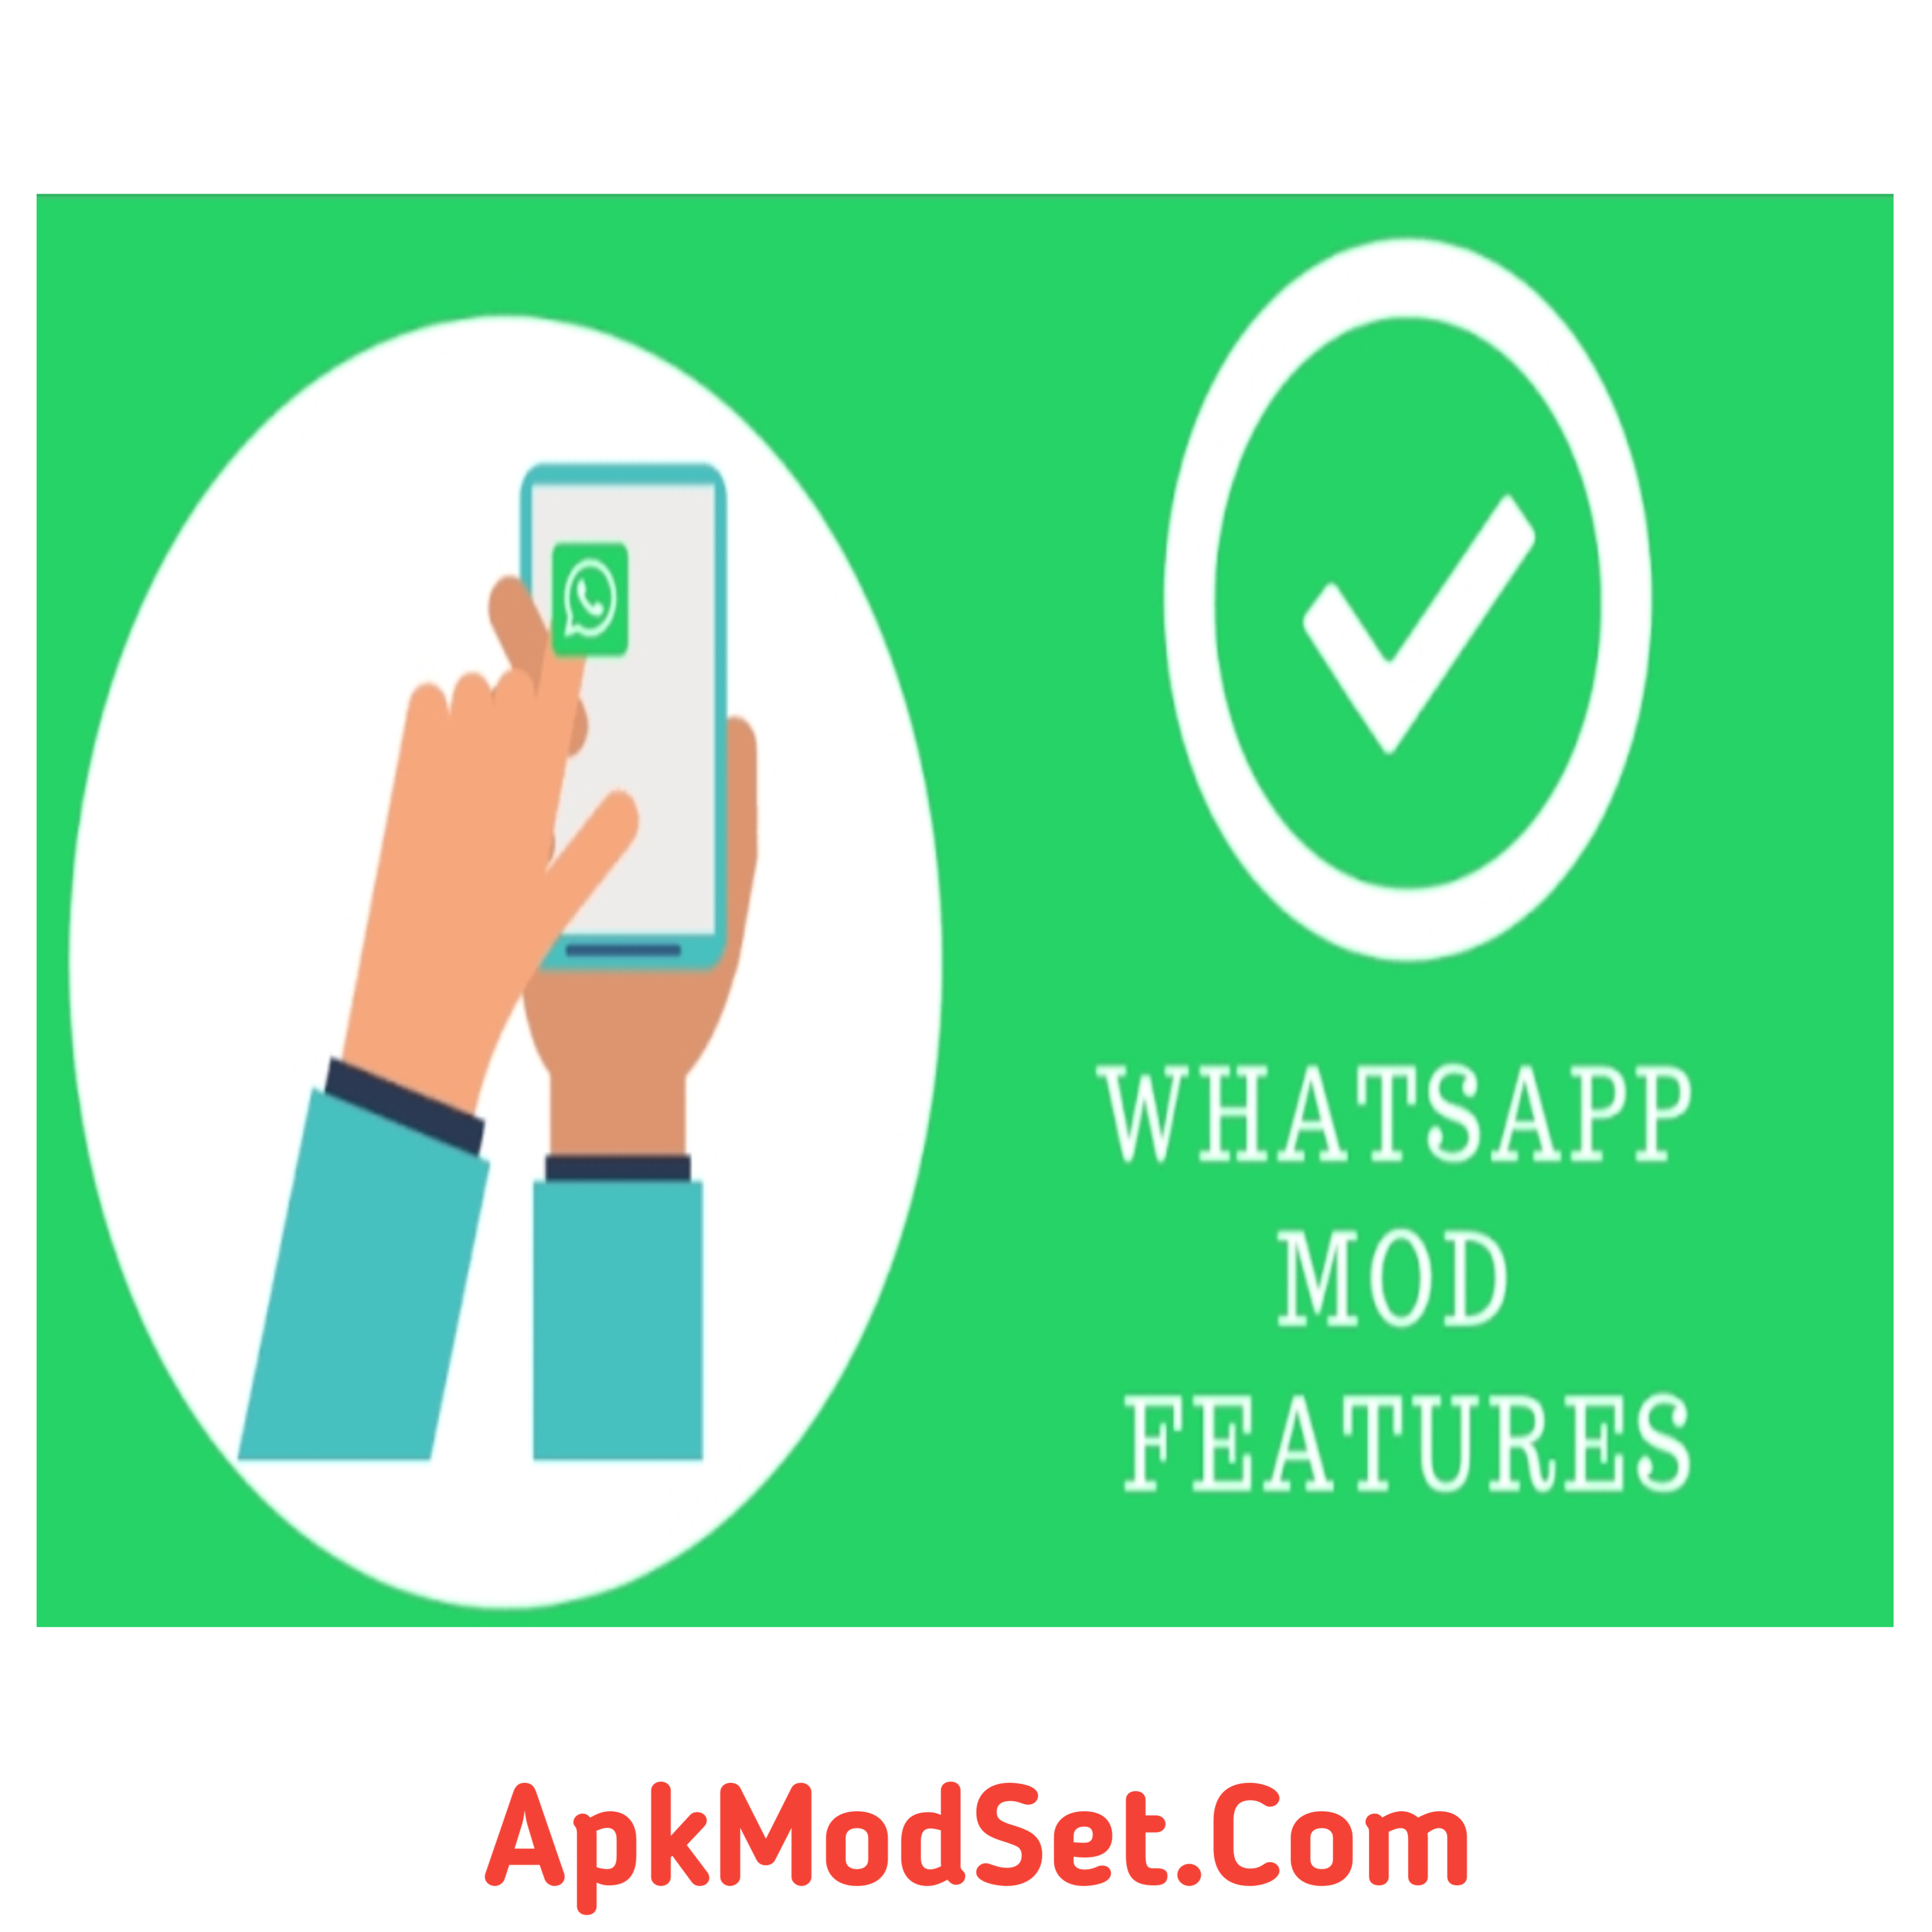 Download the Latest WhatsApp MOD Apk